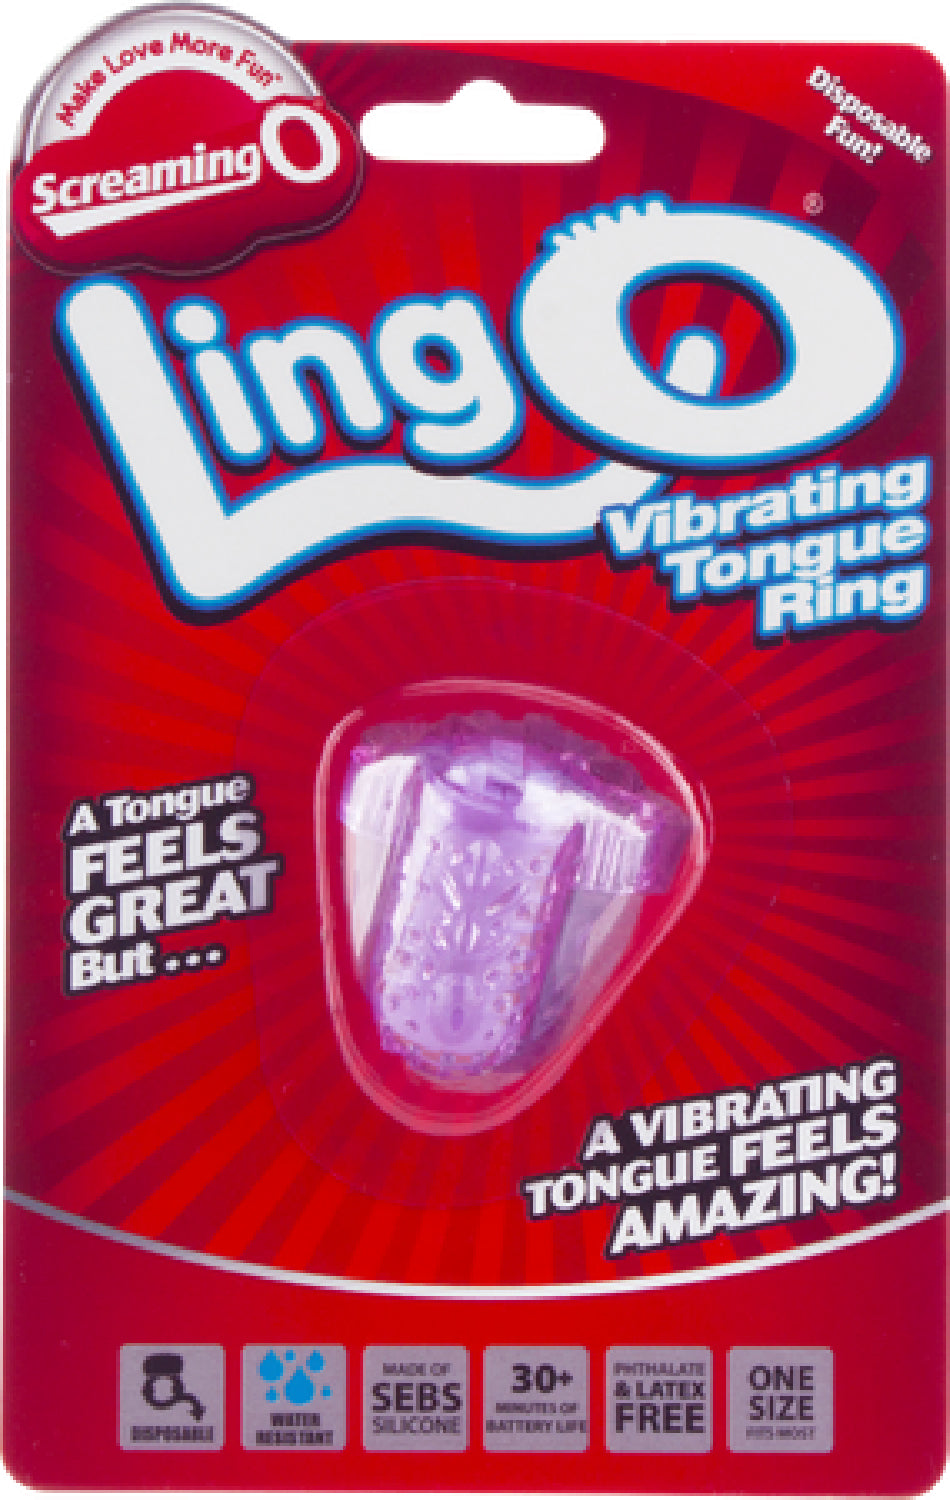 Ling O (Lavender)